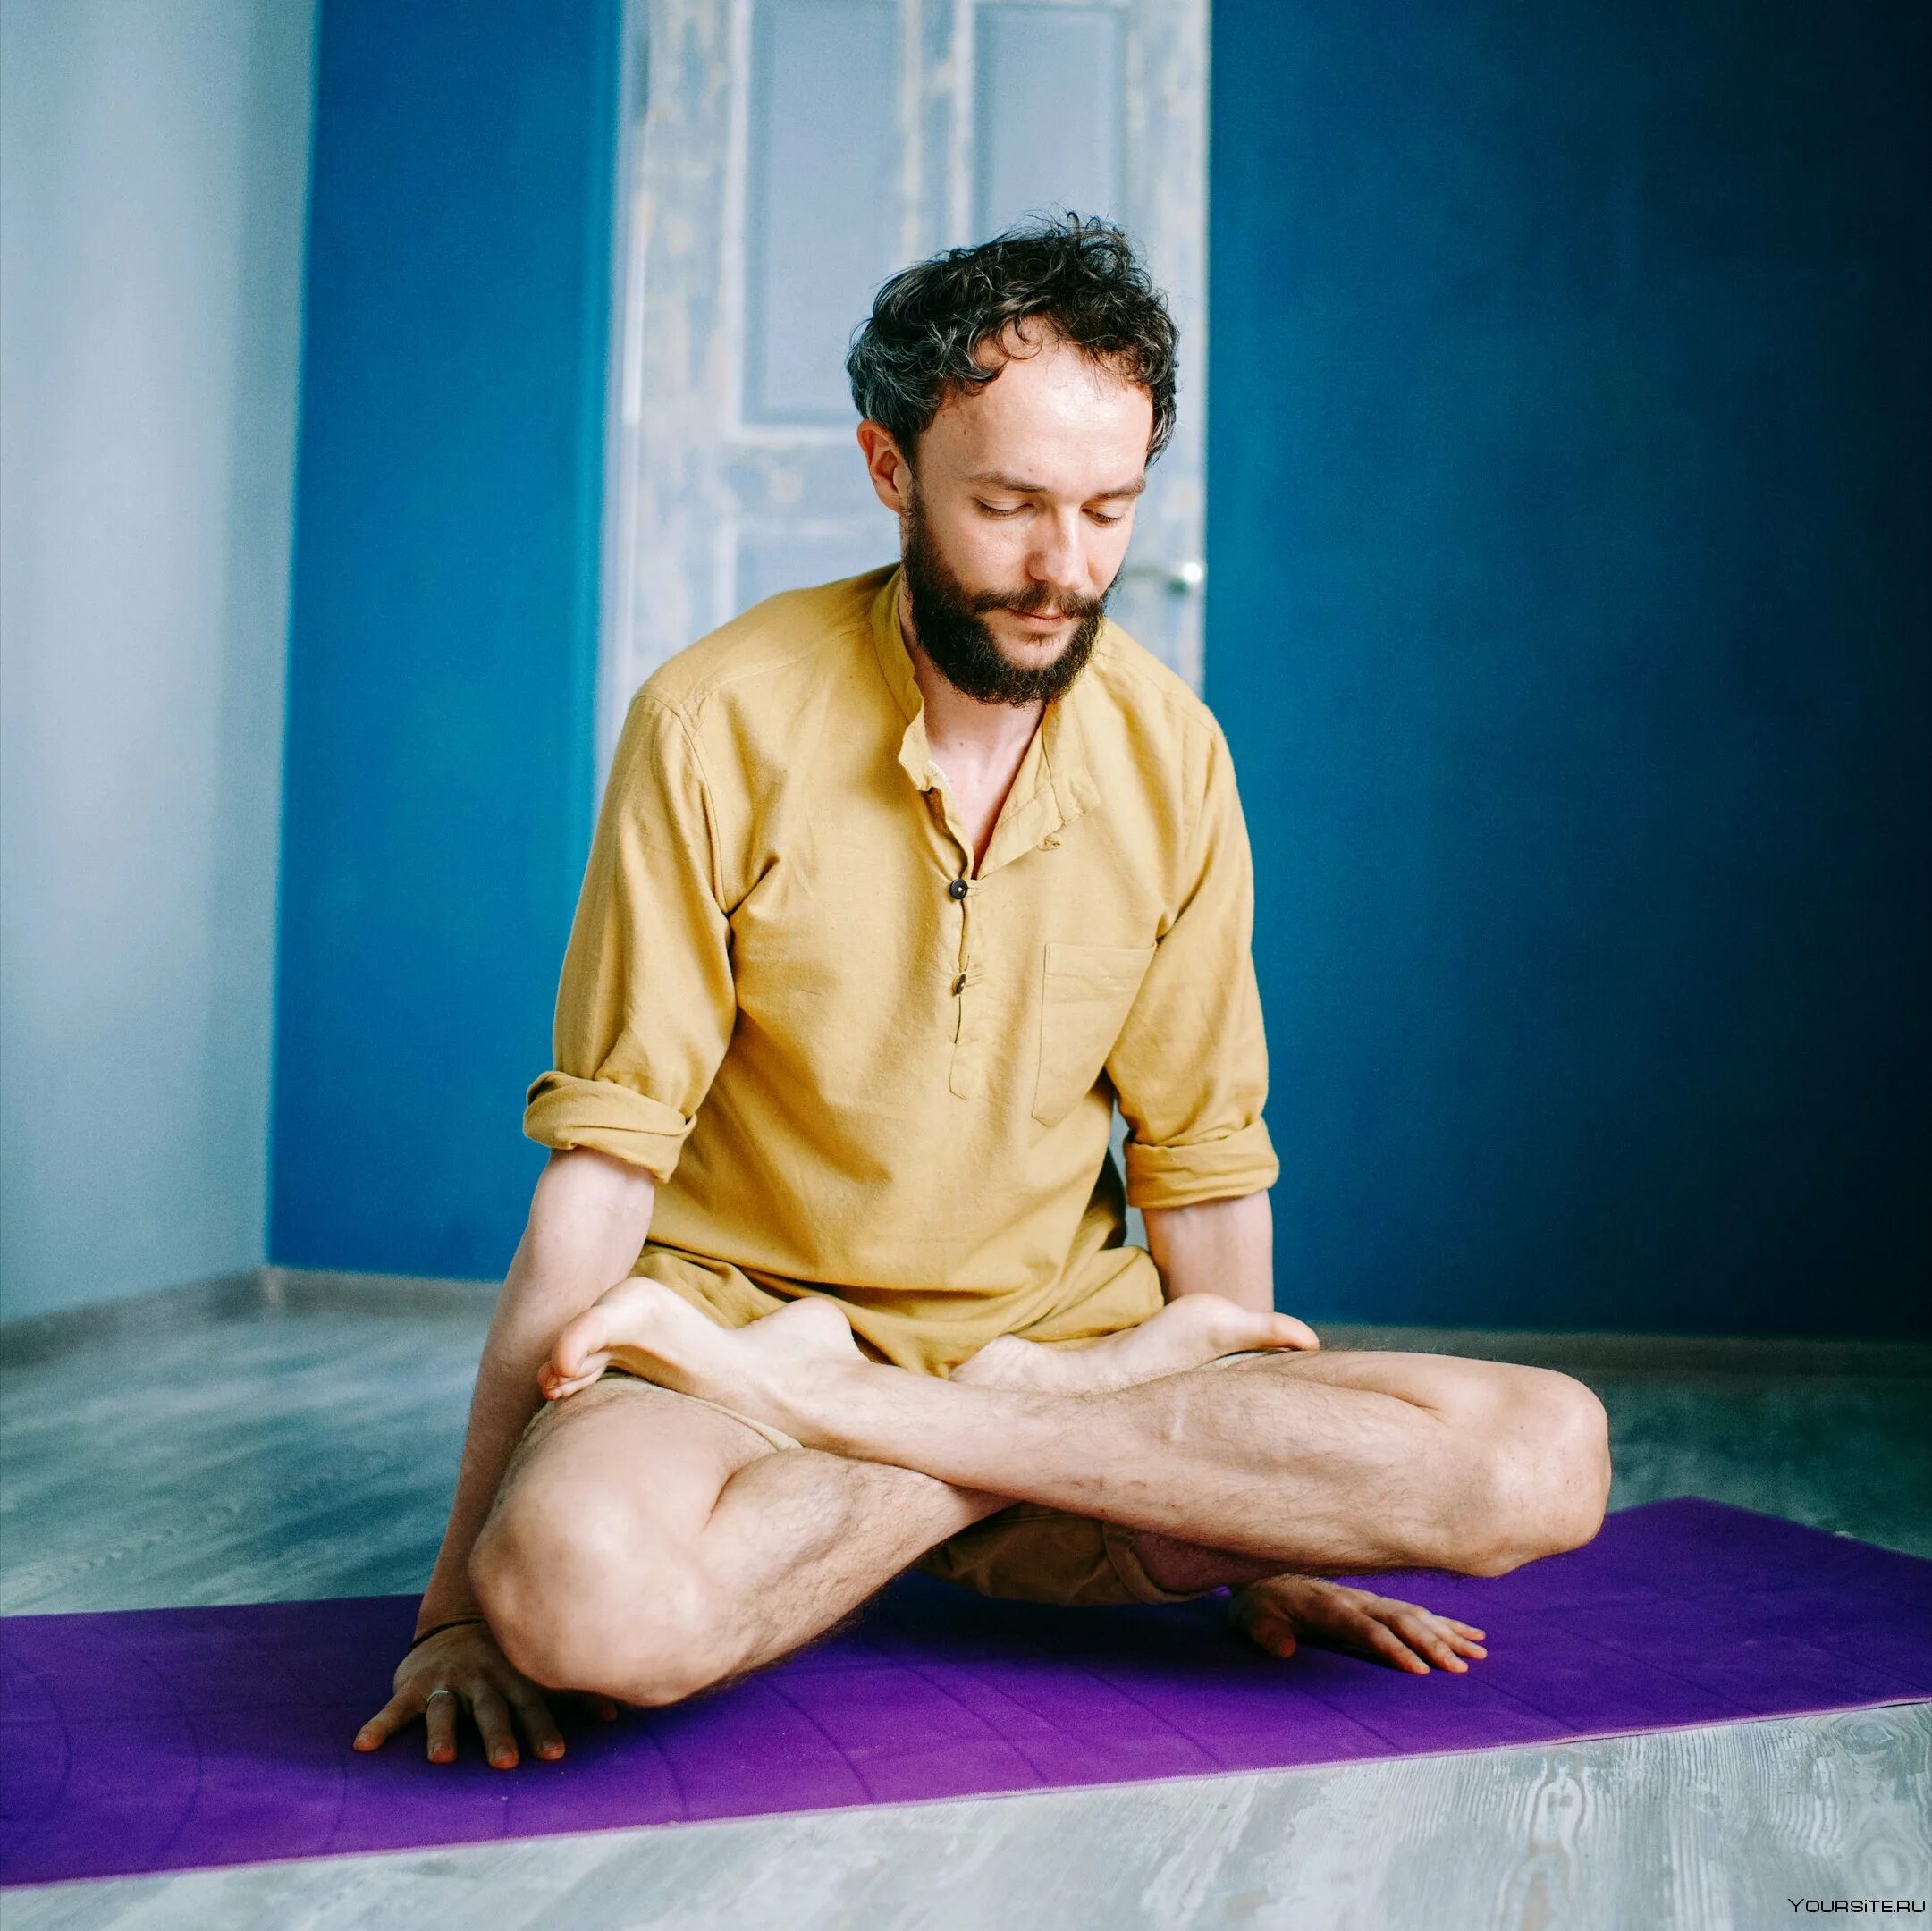 Дада медитация. Раджадхираджа йога асаны. Дада Садананда йога. Преподаватель йоги.